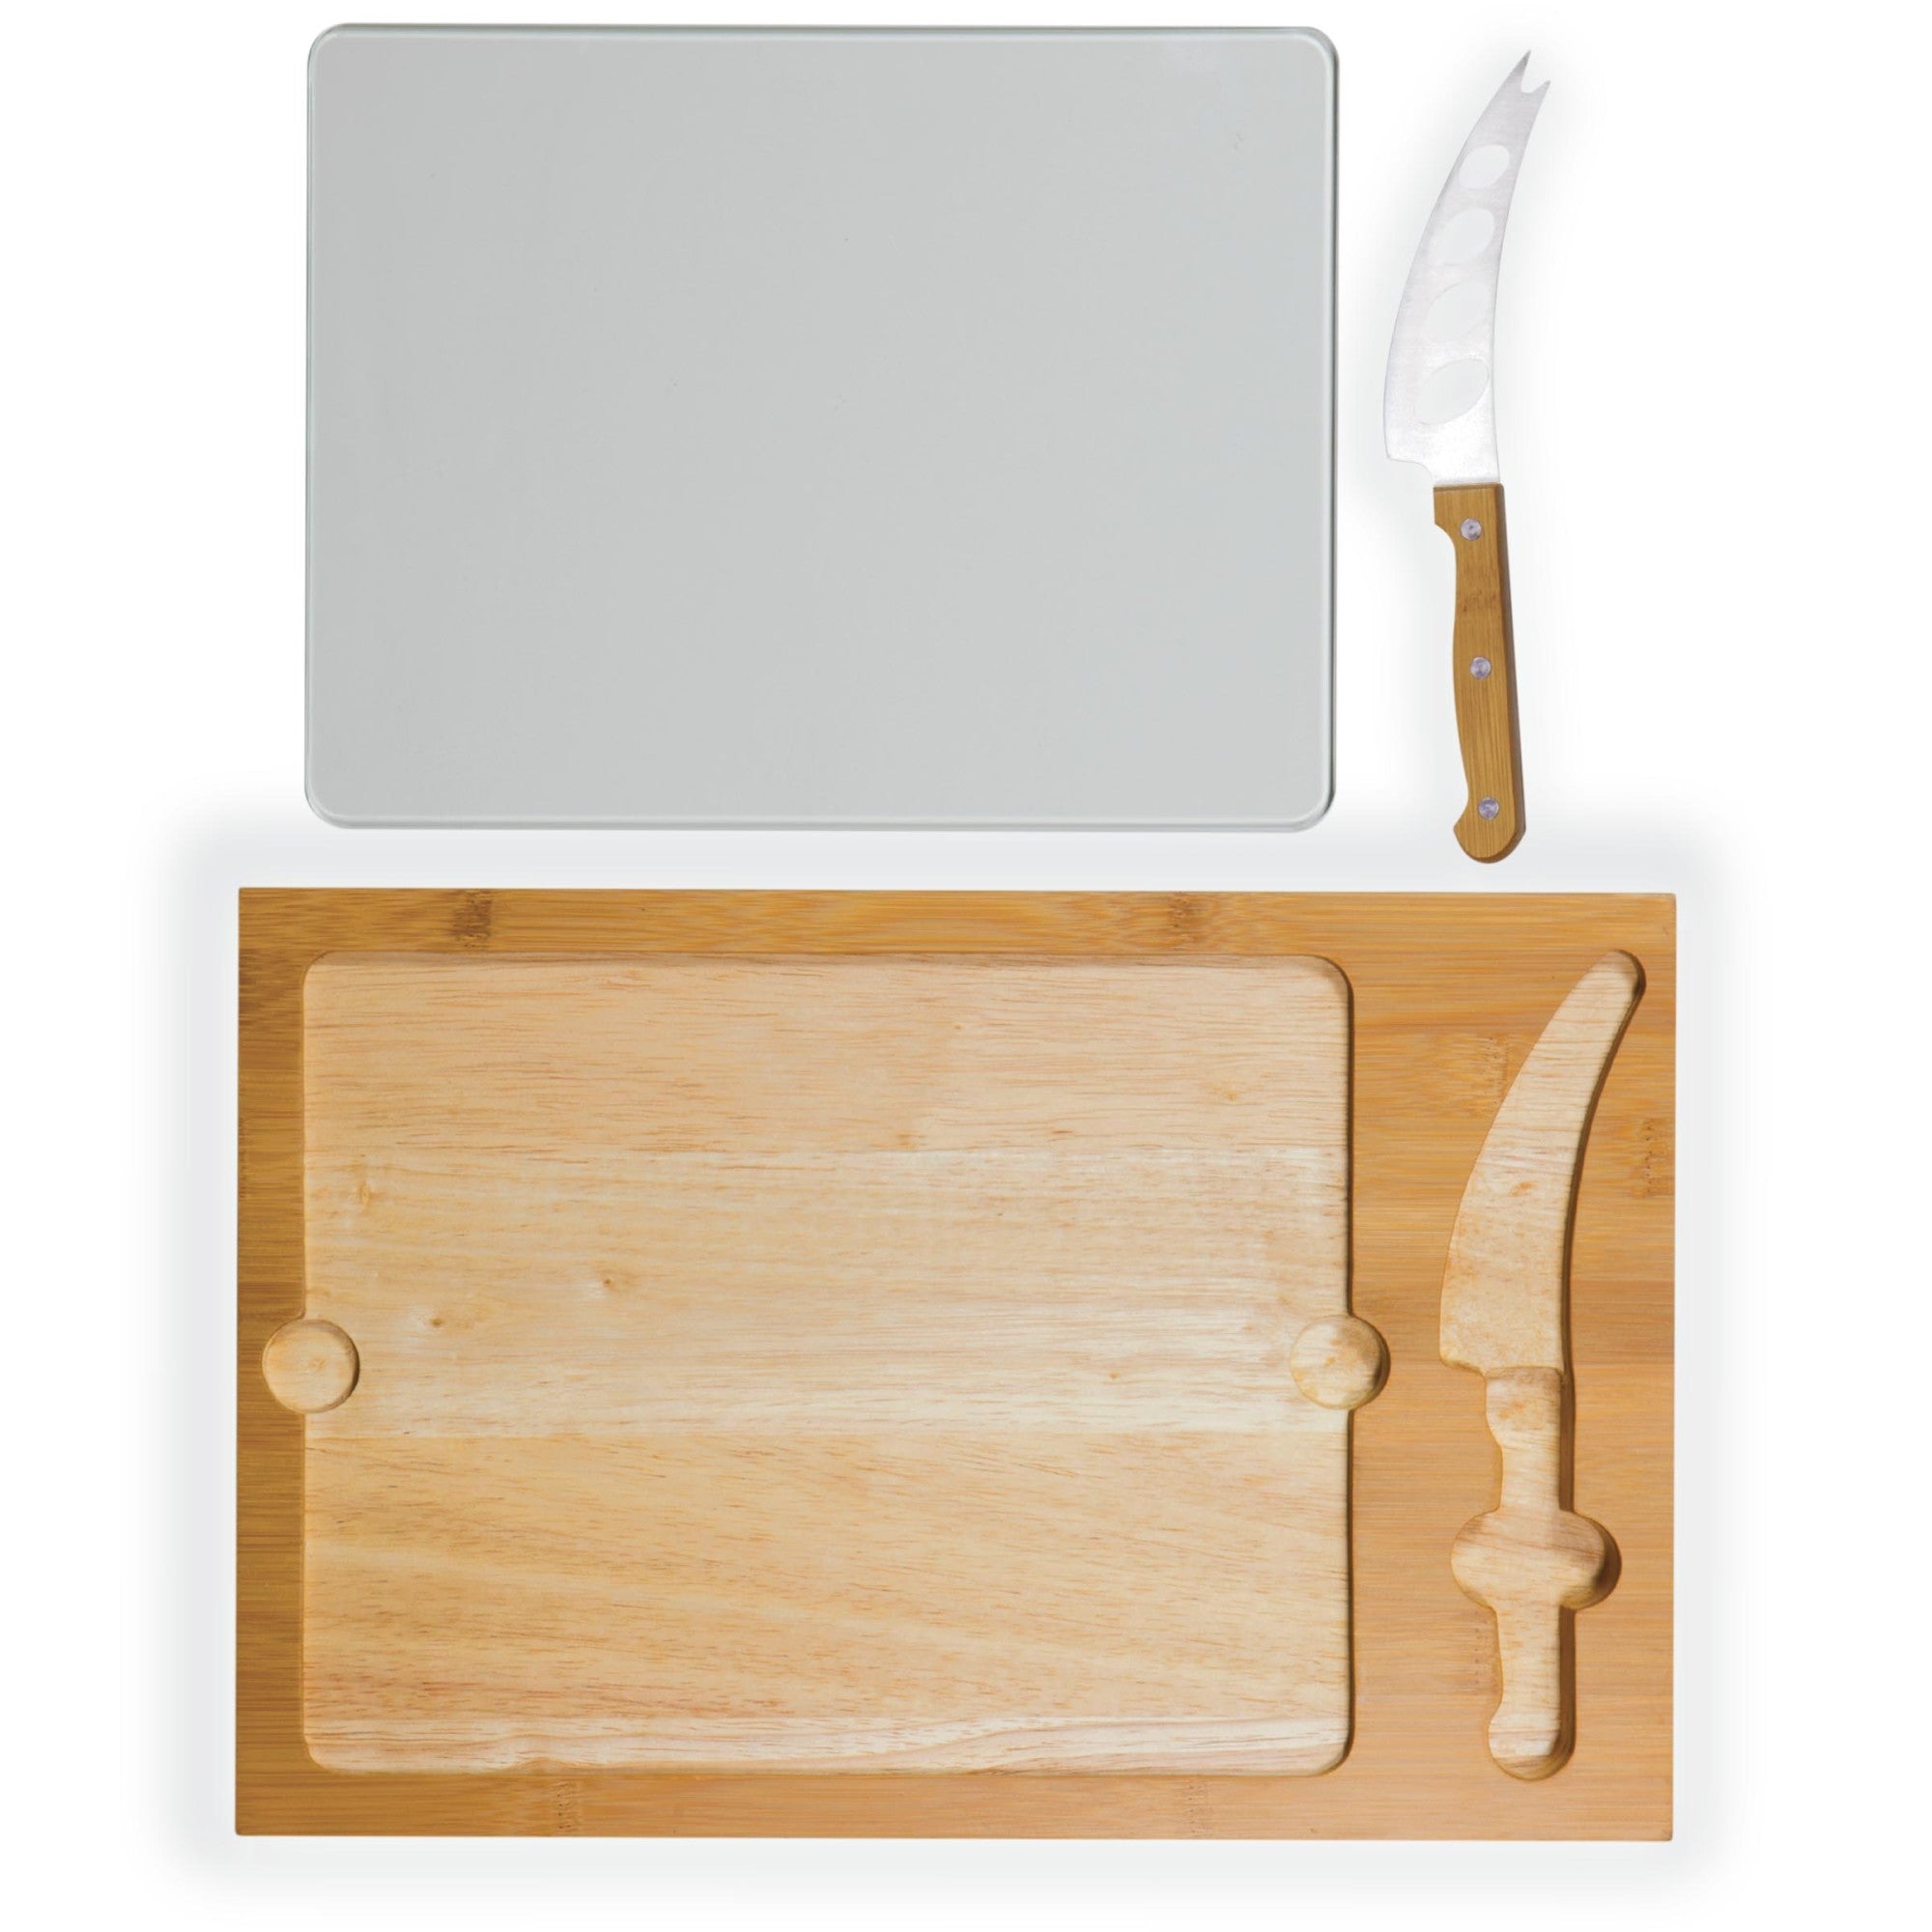 5-Piece Knife Set with Cutting Board KS10095